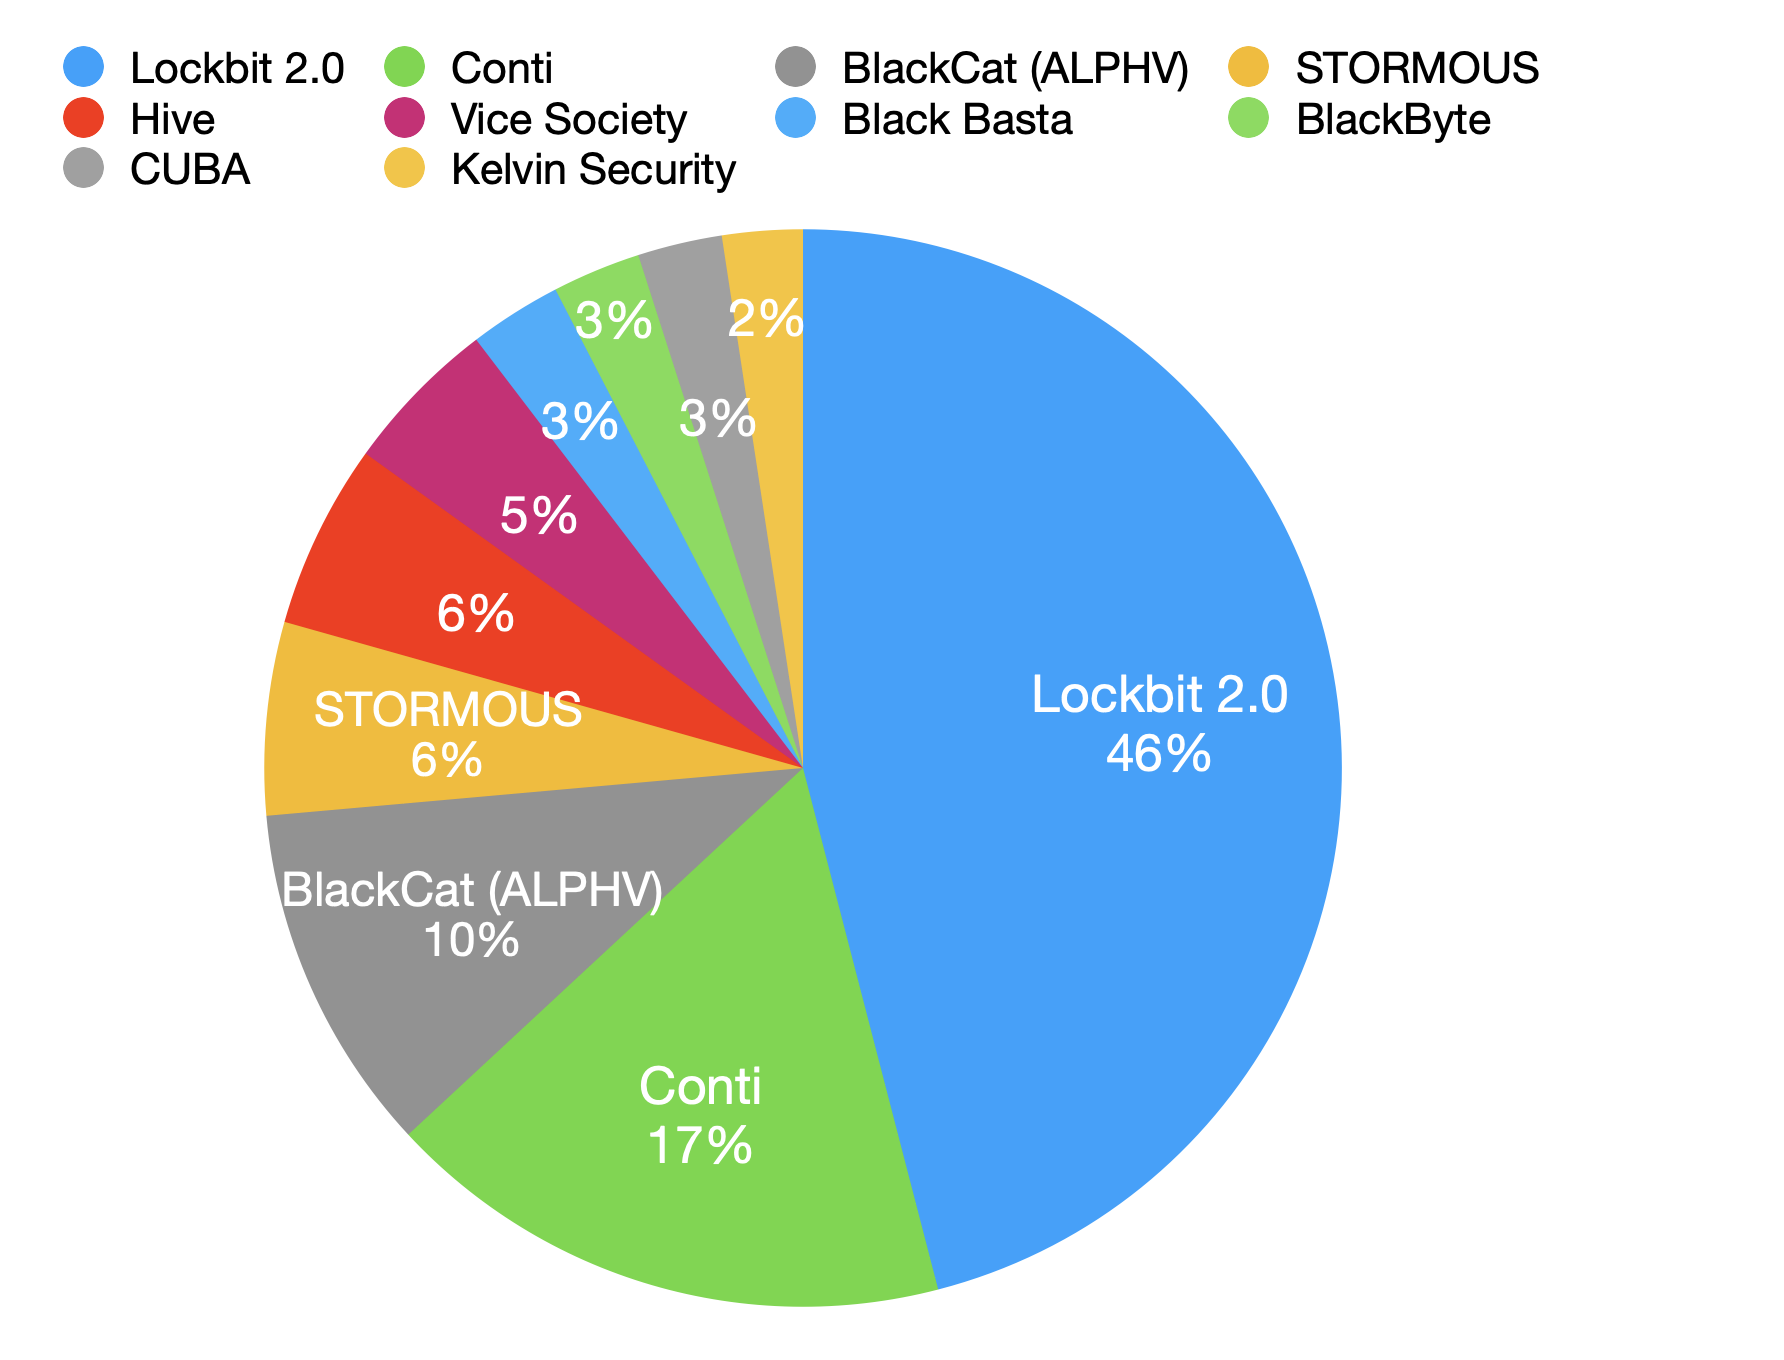 LockBit 2.0 46%, Conti 17%, BlackCat (ALPHV) 10%, Stormous 6%, Hive 6%, Vice Society 5%, Black Basta 3%, BlackByte 3%, Cuba 3%, Kelvin Security 2%